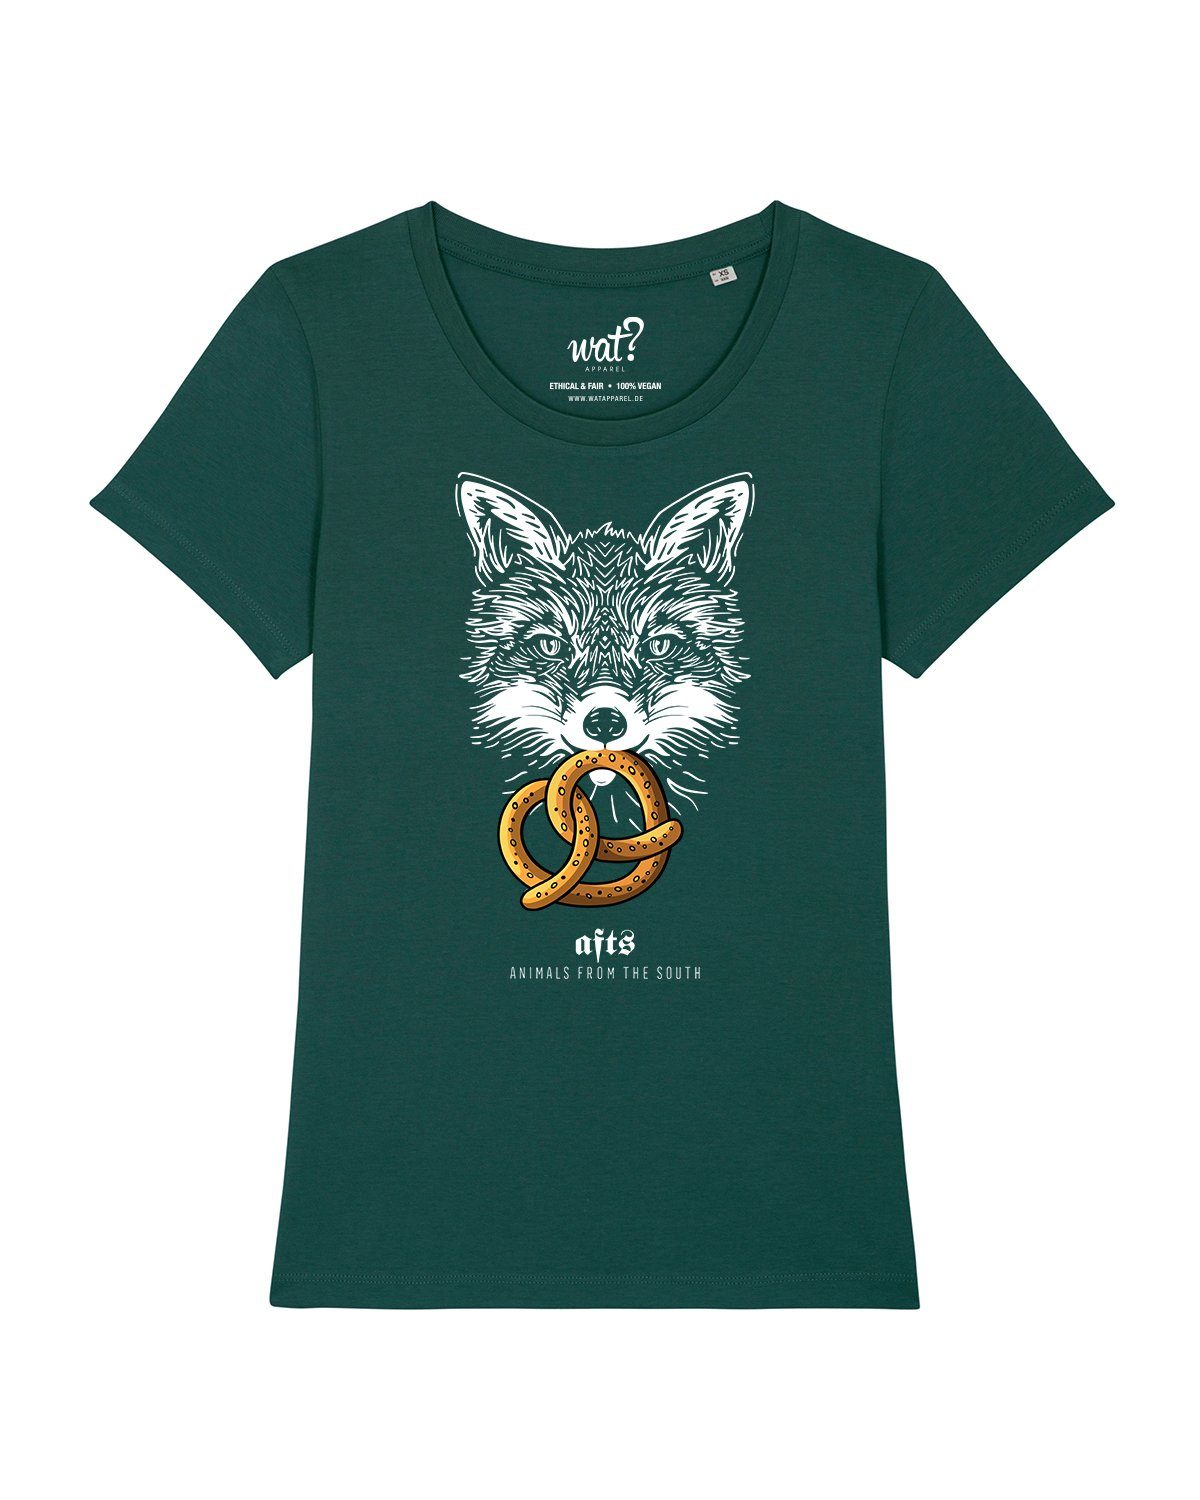 (1-tlg) Apparel wat? glazed [#afts] grün Fuchs Print-Shirt